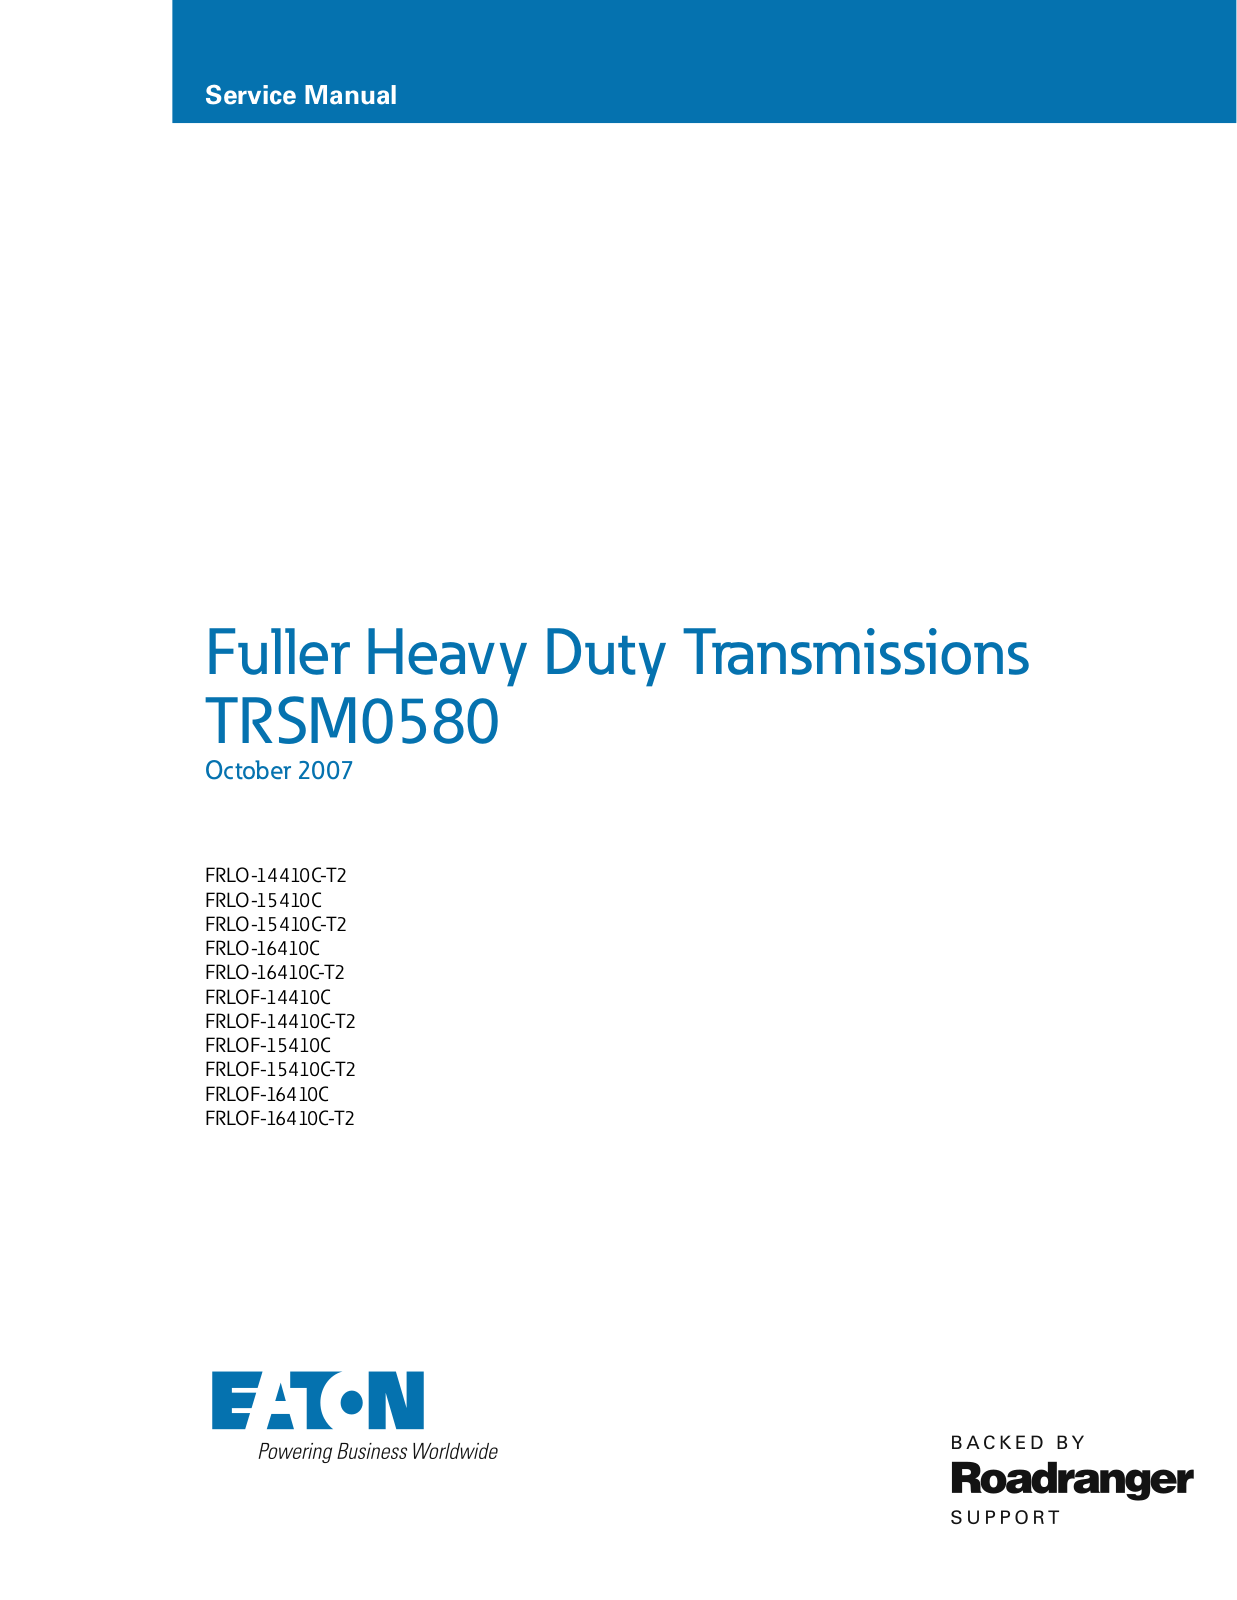 Eaton Transmission FRLO-16410C-T2 Service Manual